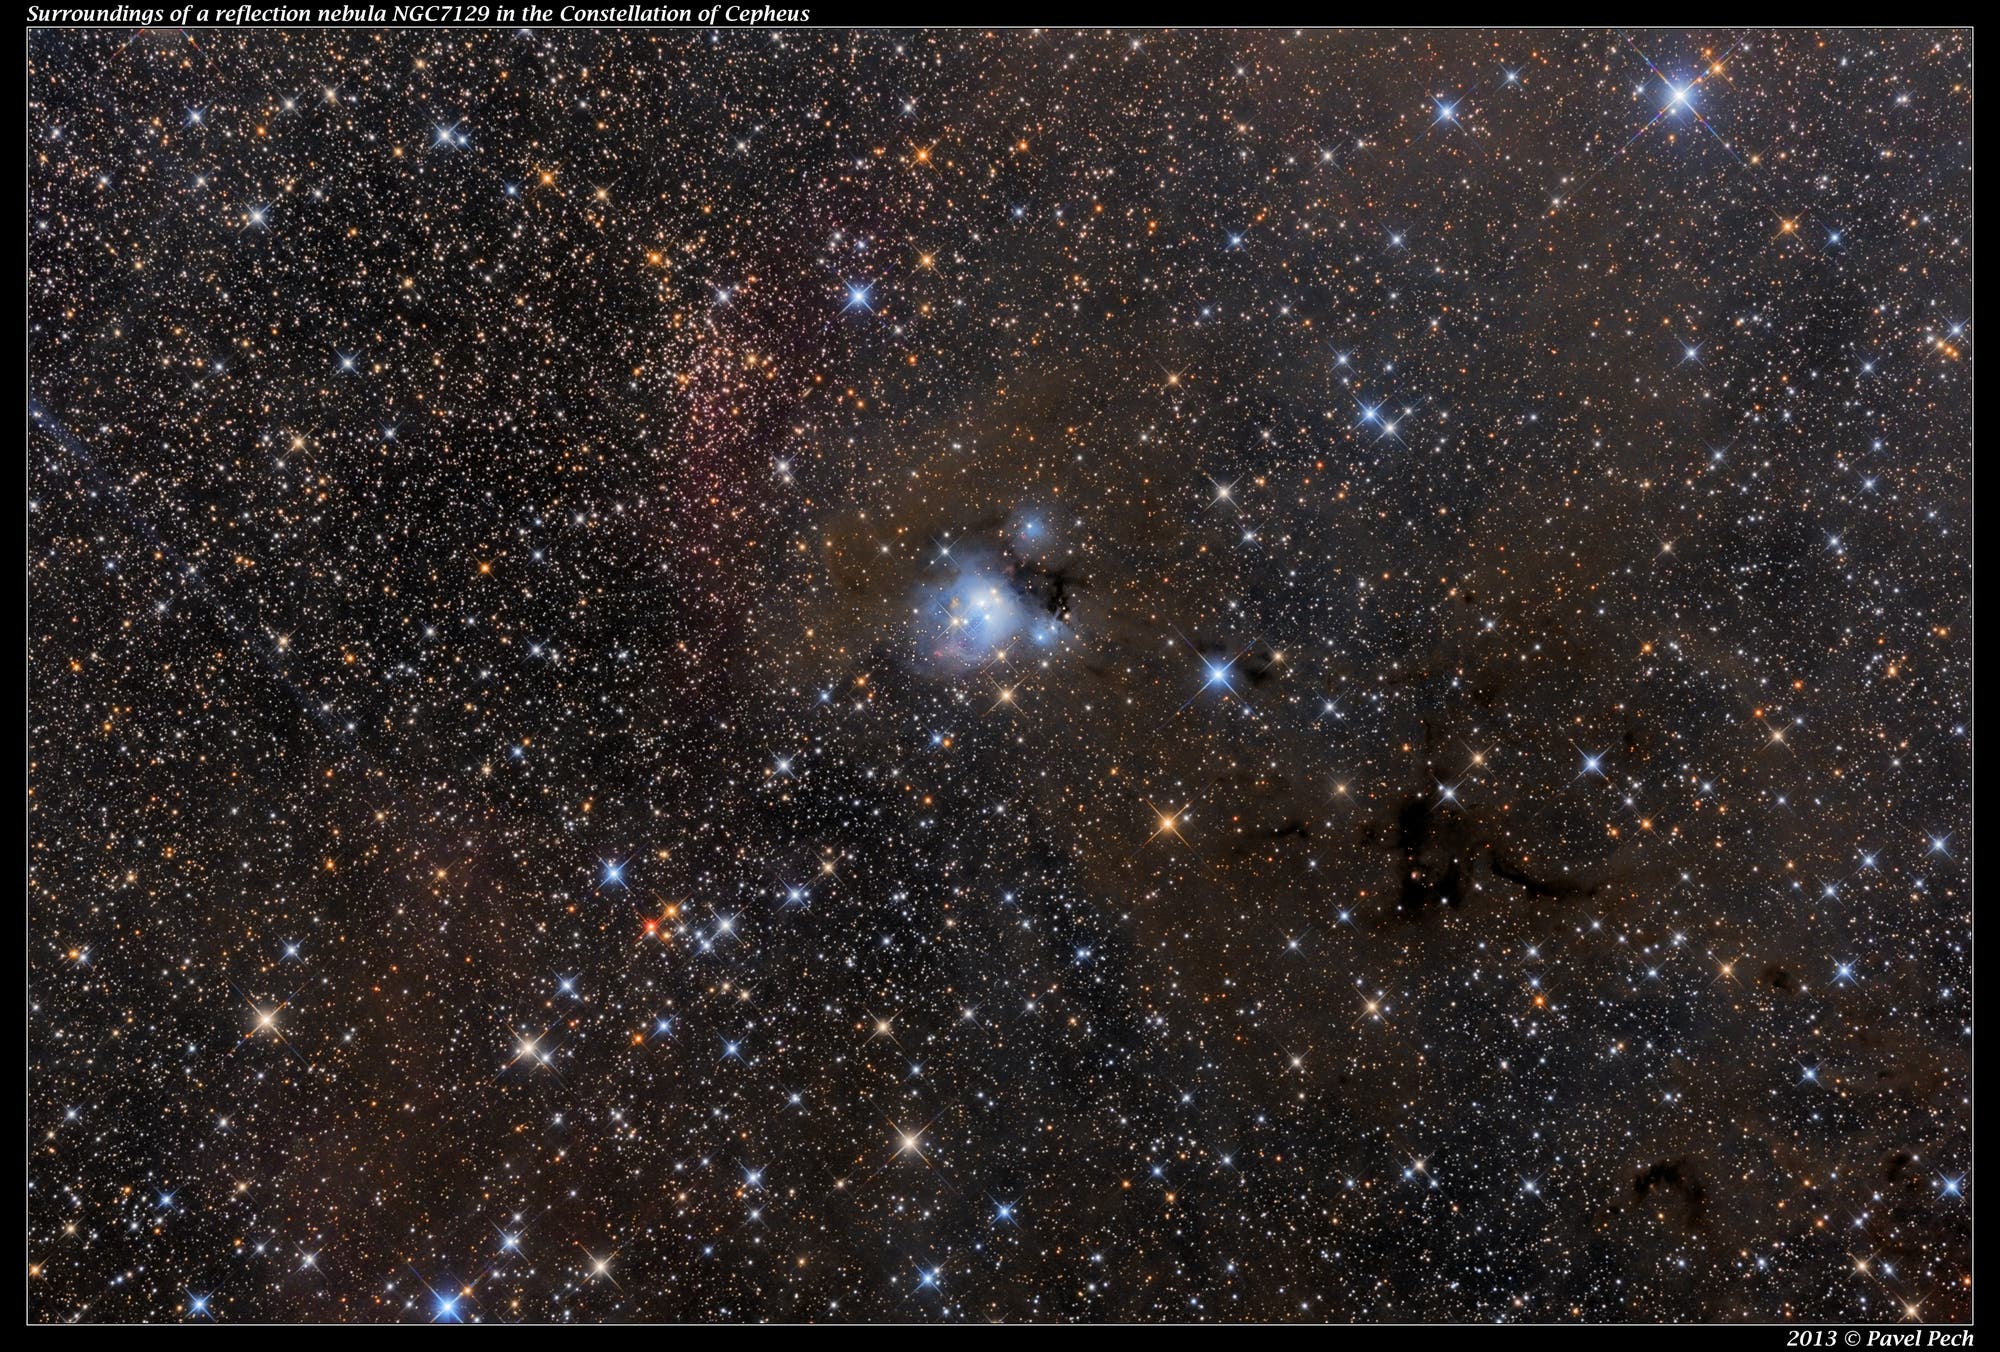 NGC 7129 and surroundings